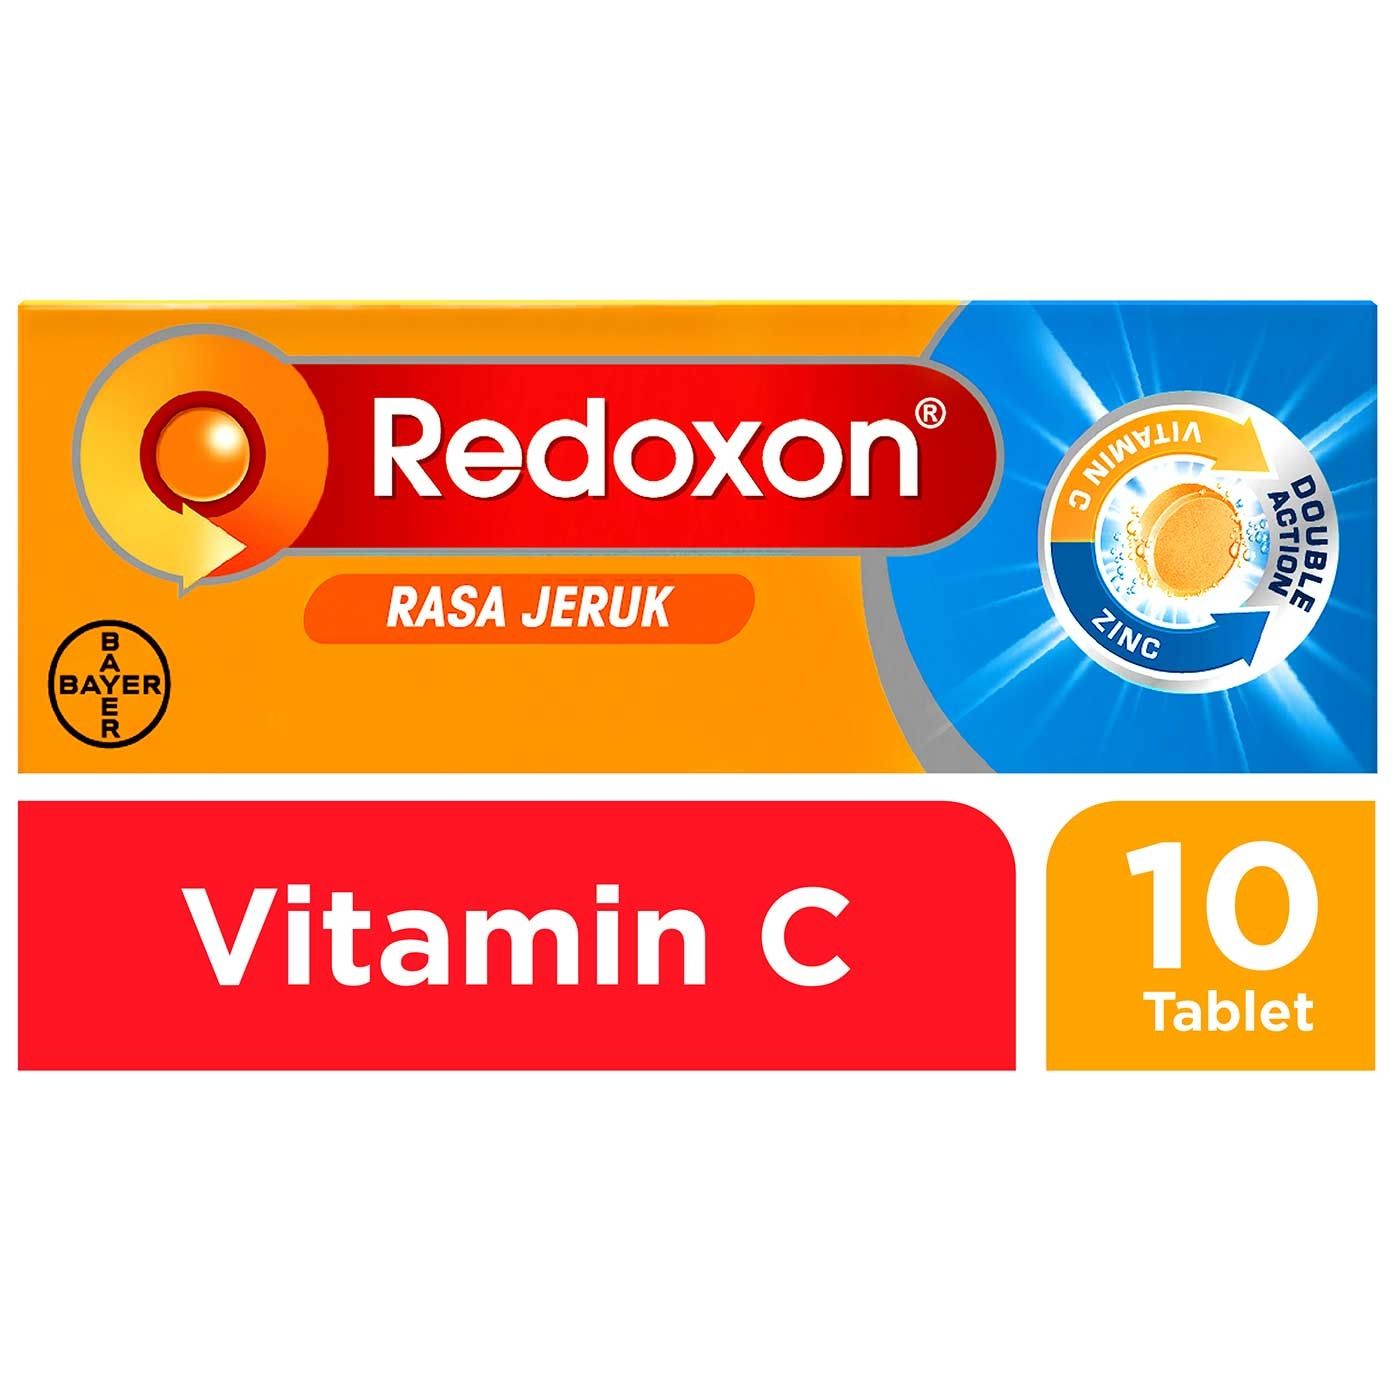 Redoxon Vitamin C + Zinc Rasa Jeruk 10 Tablet - 1